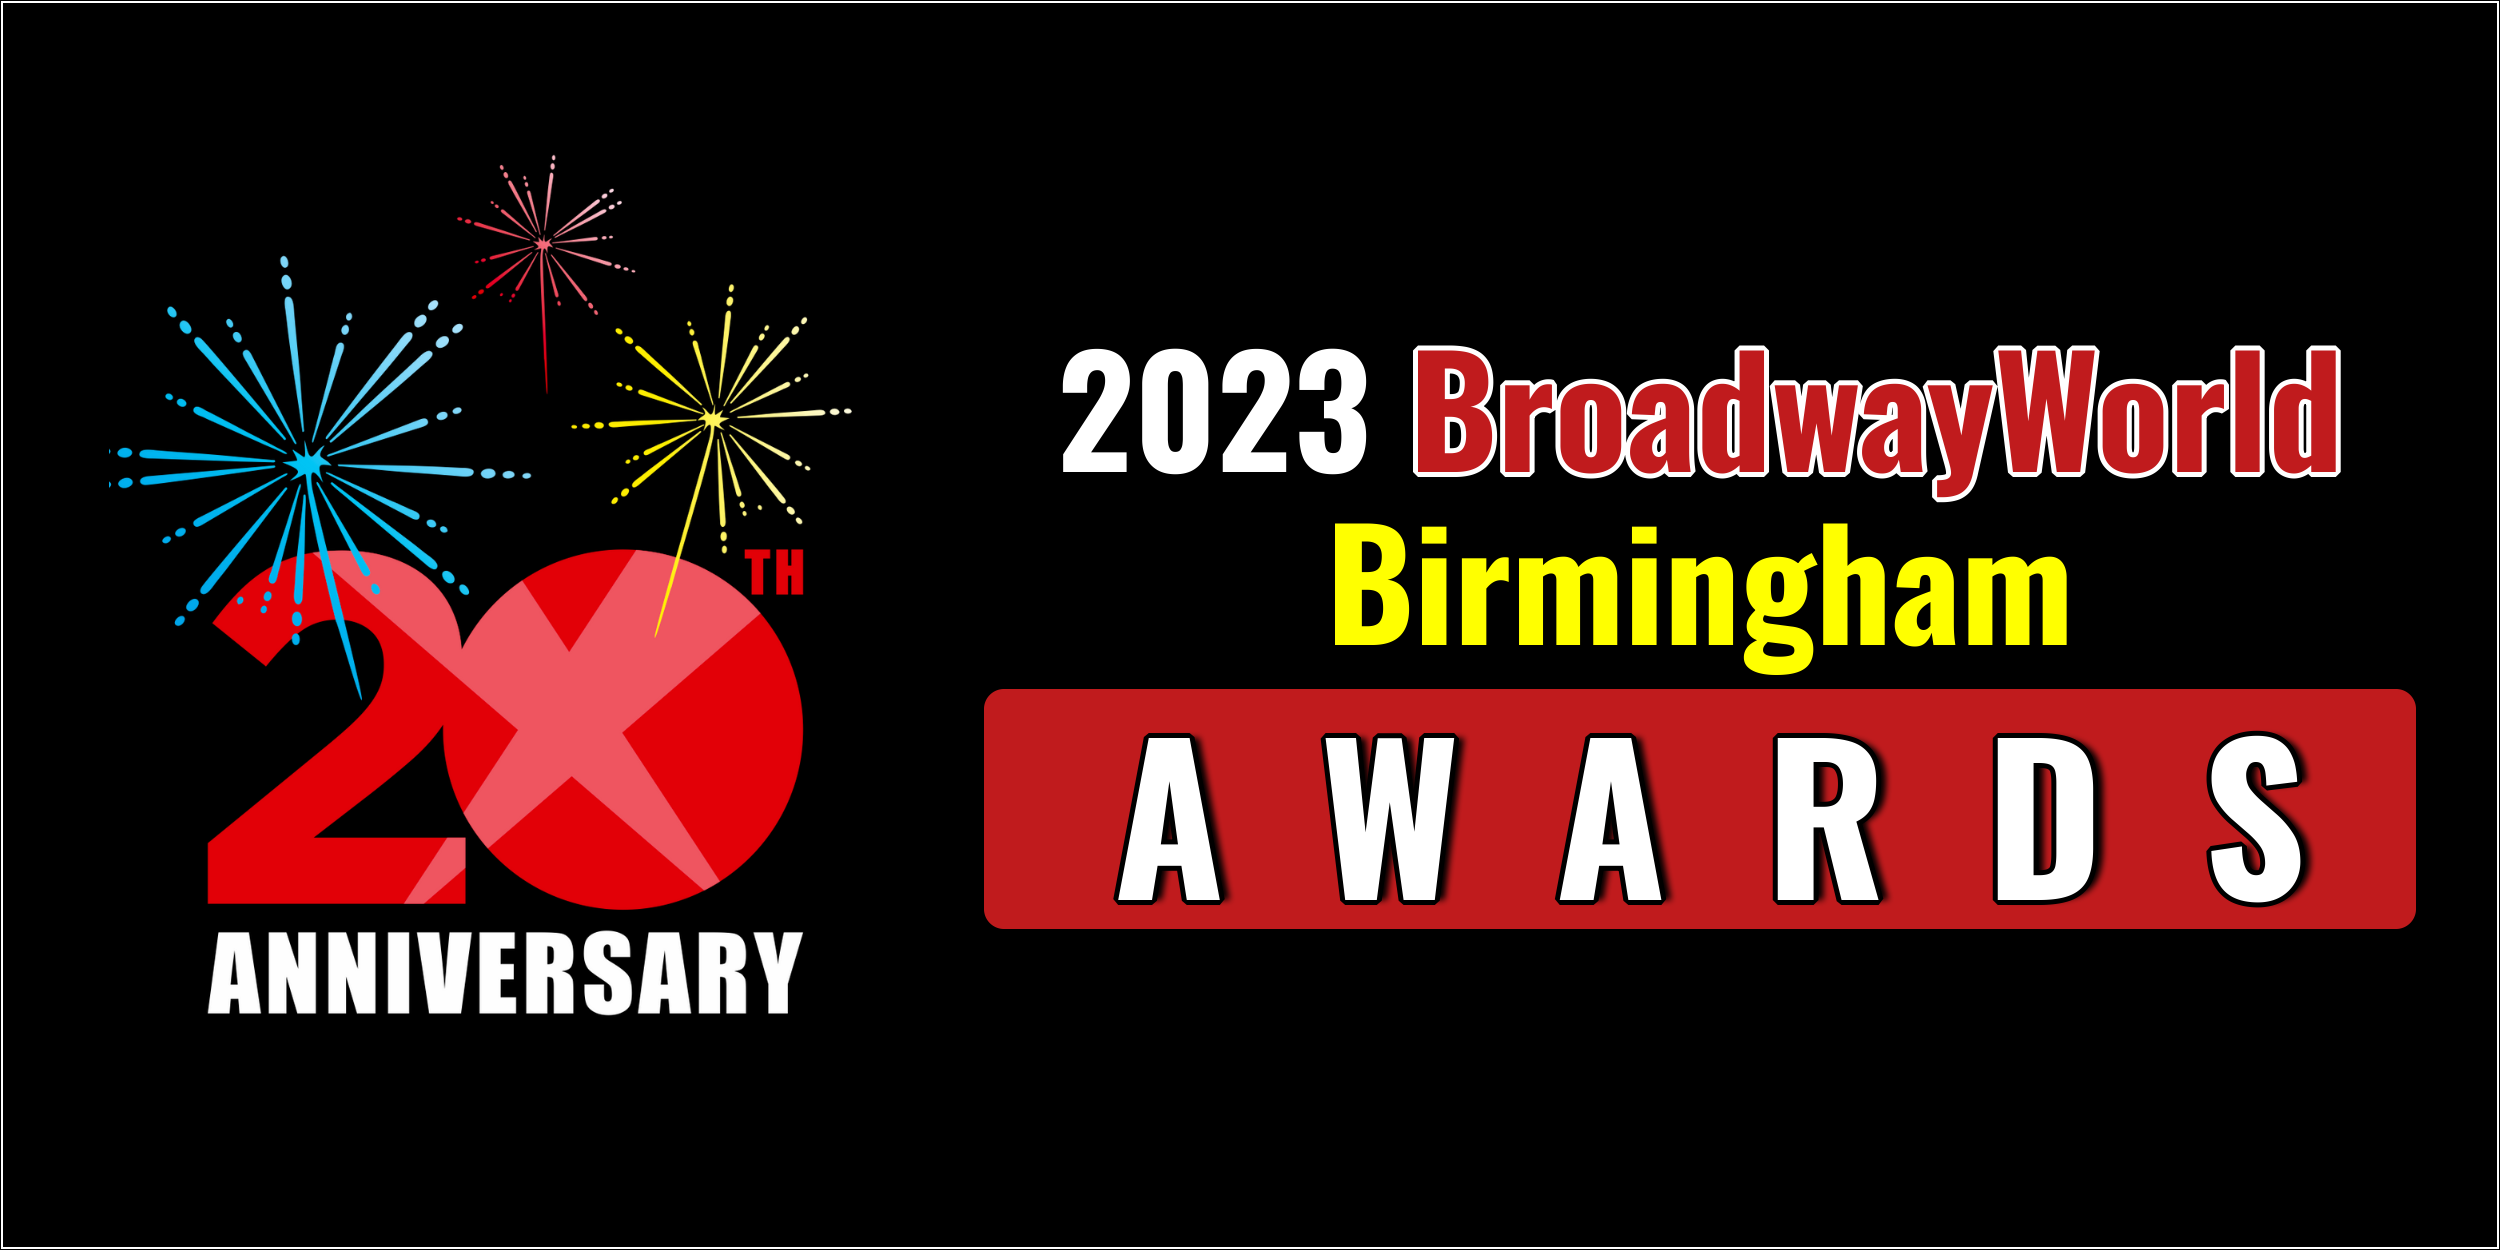 Latest Standings Announced For The 2023 BroadwayWorld Birmingham Awards; STEEL MAGNOLIAS L Photo